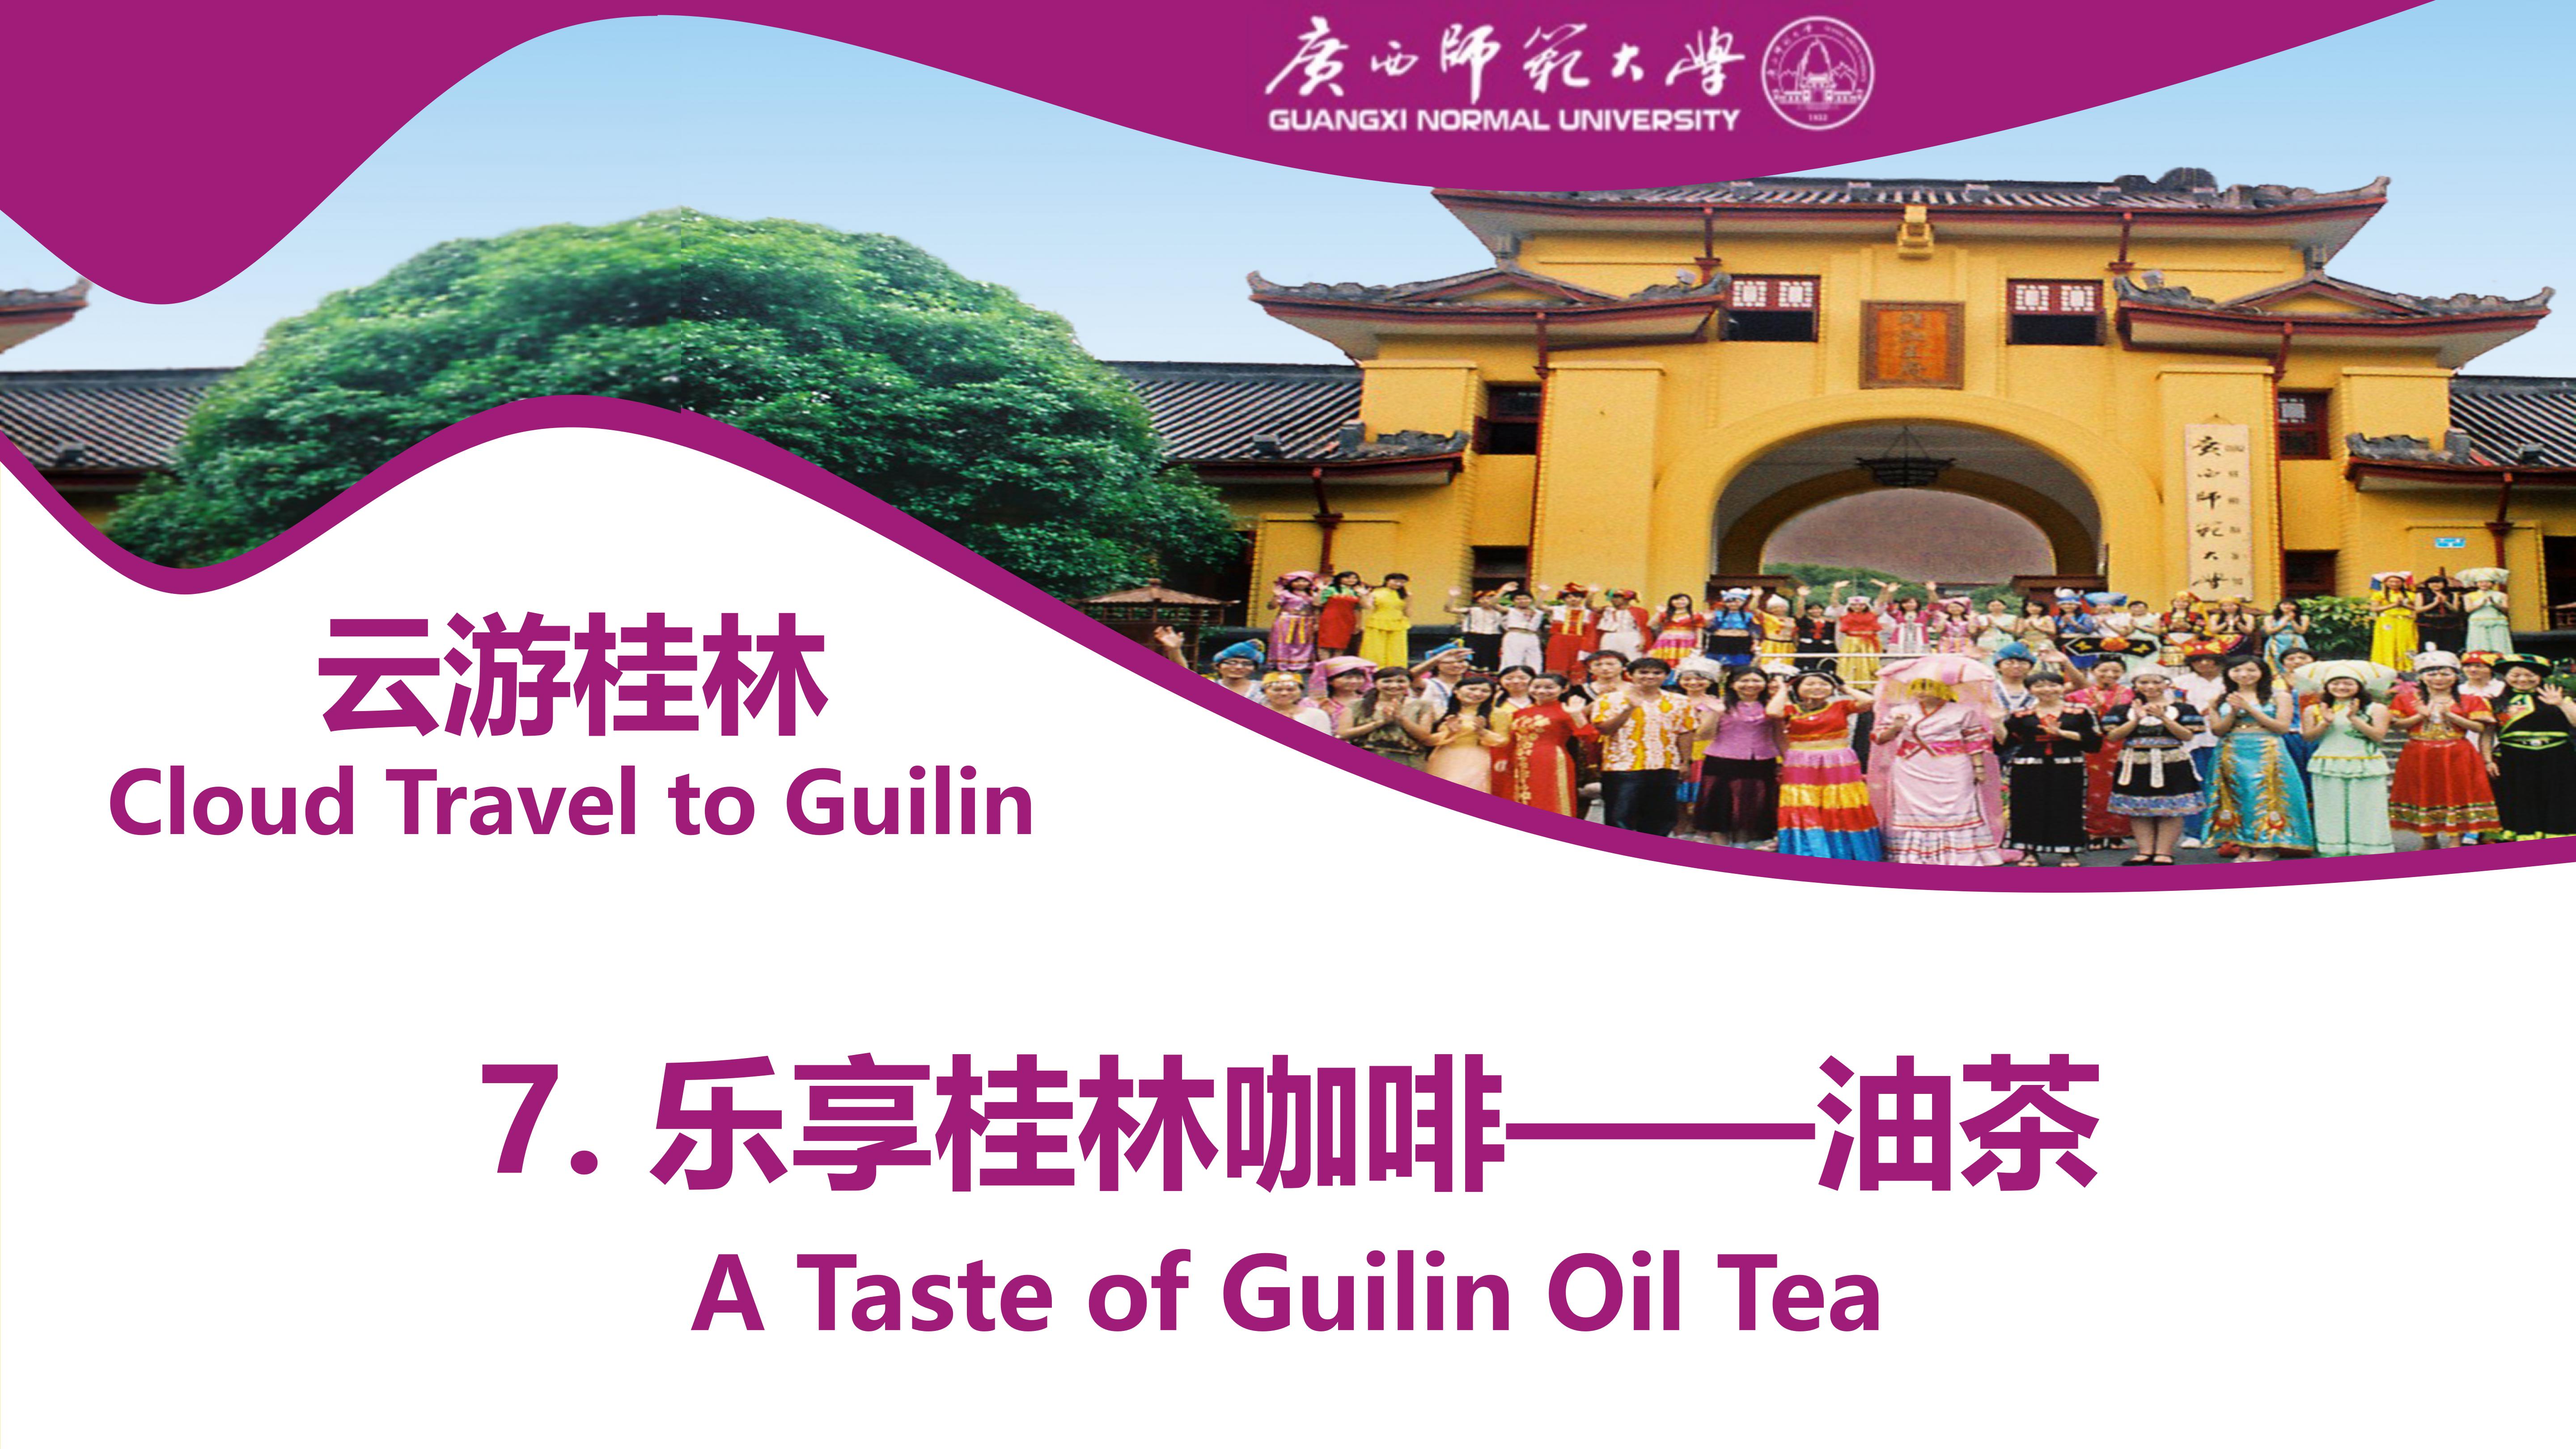 A Taste of Guilin Oil Tea